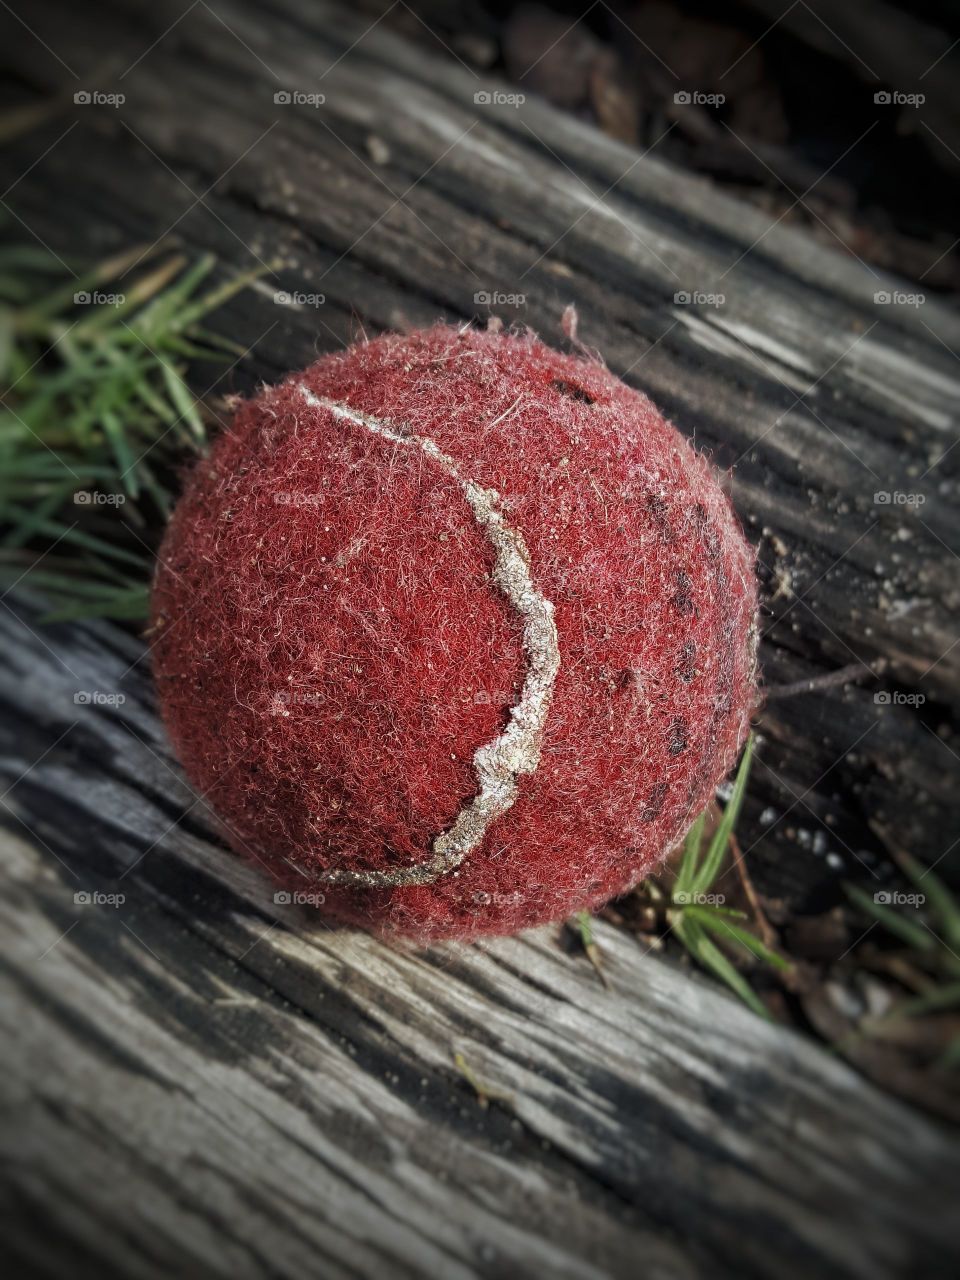 Moody ball